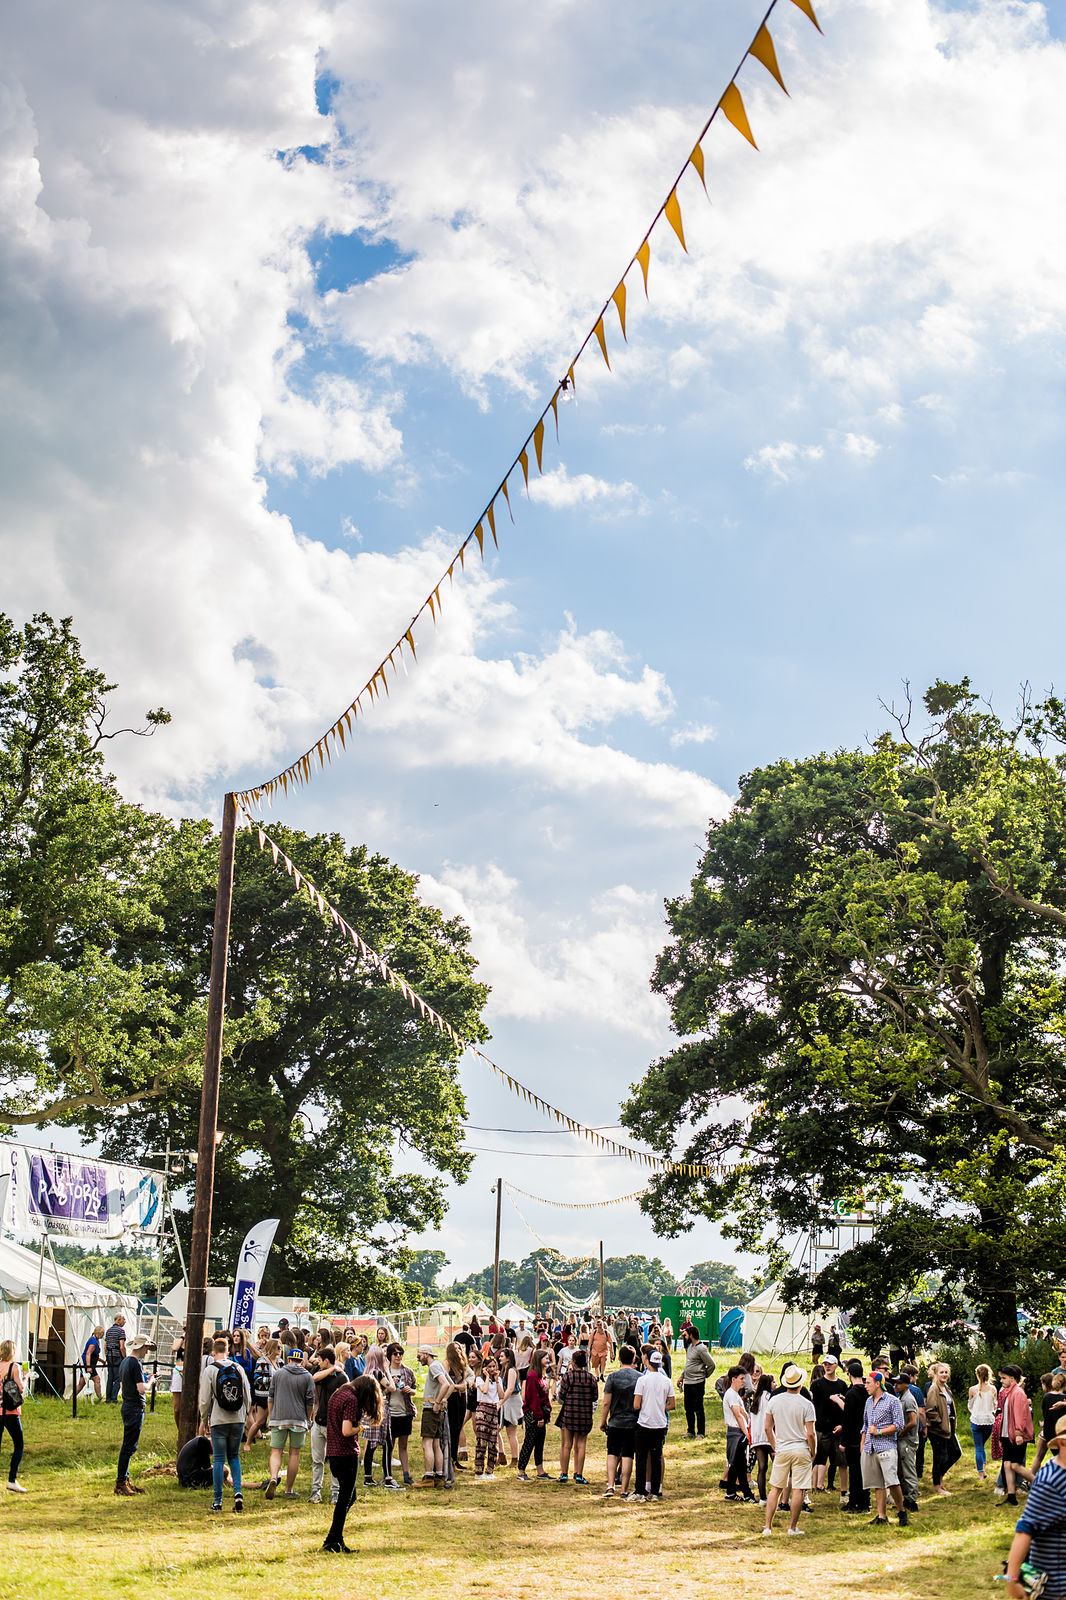 Latitude Festival 2016